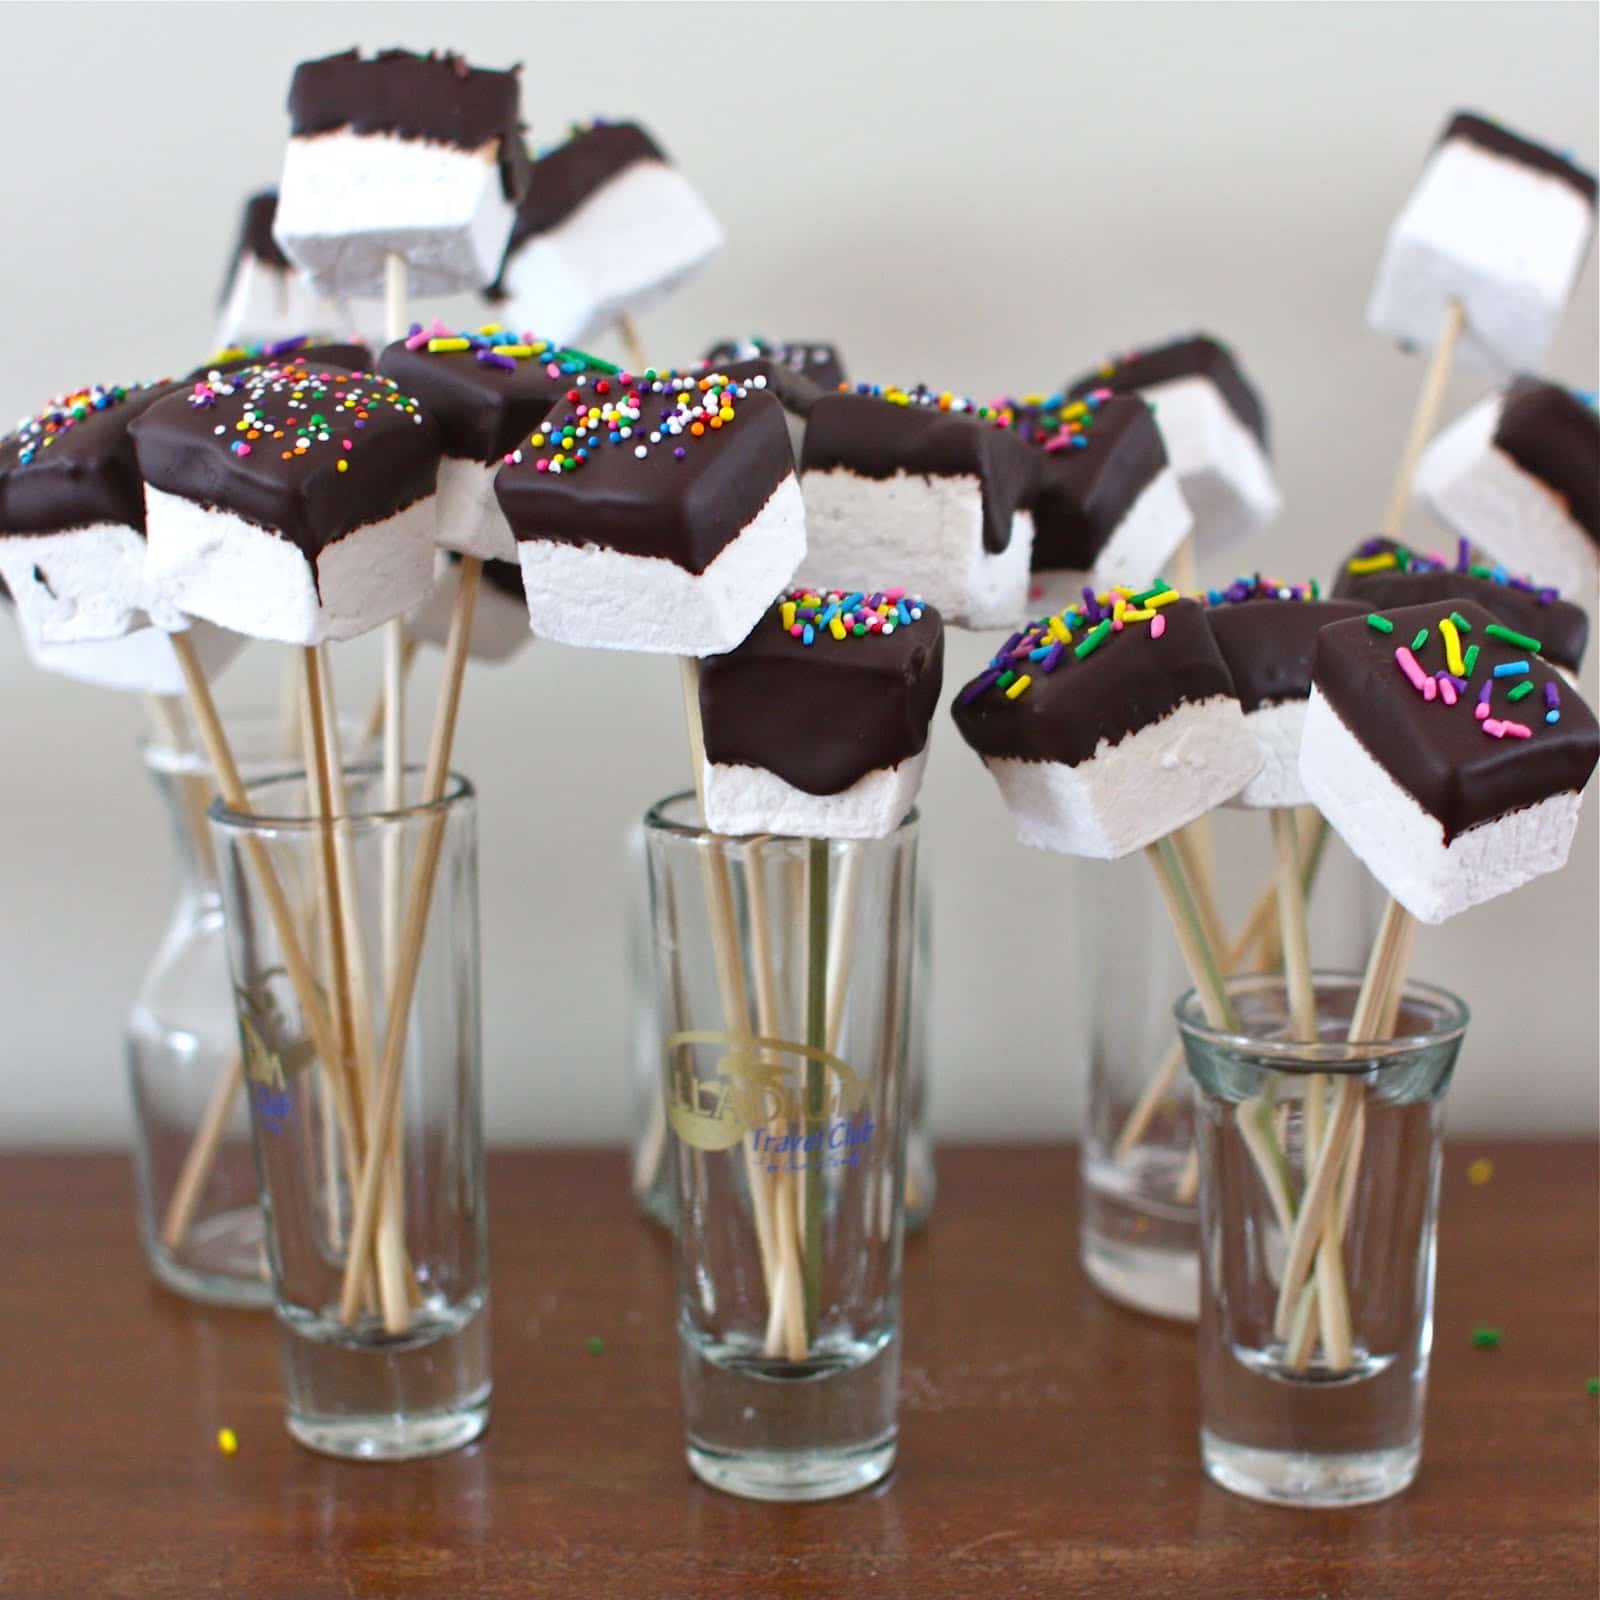 Chocolate-Dipped Vanilla Marshmallows for the Birthday Boy